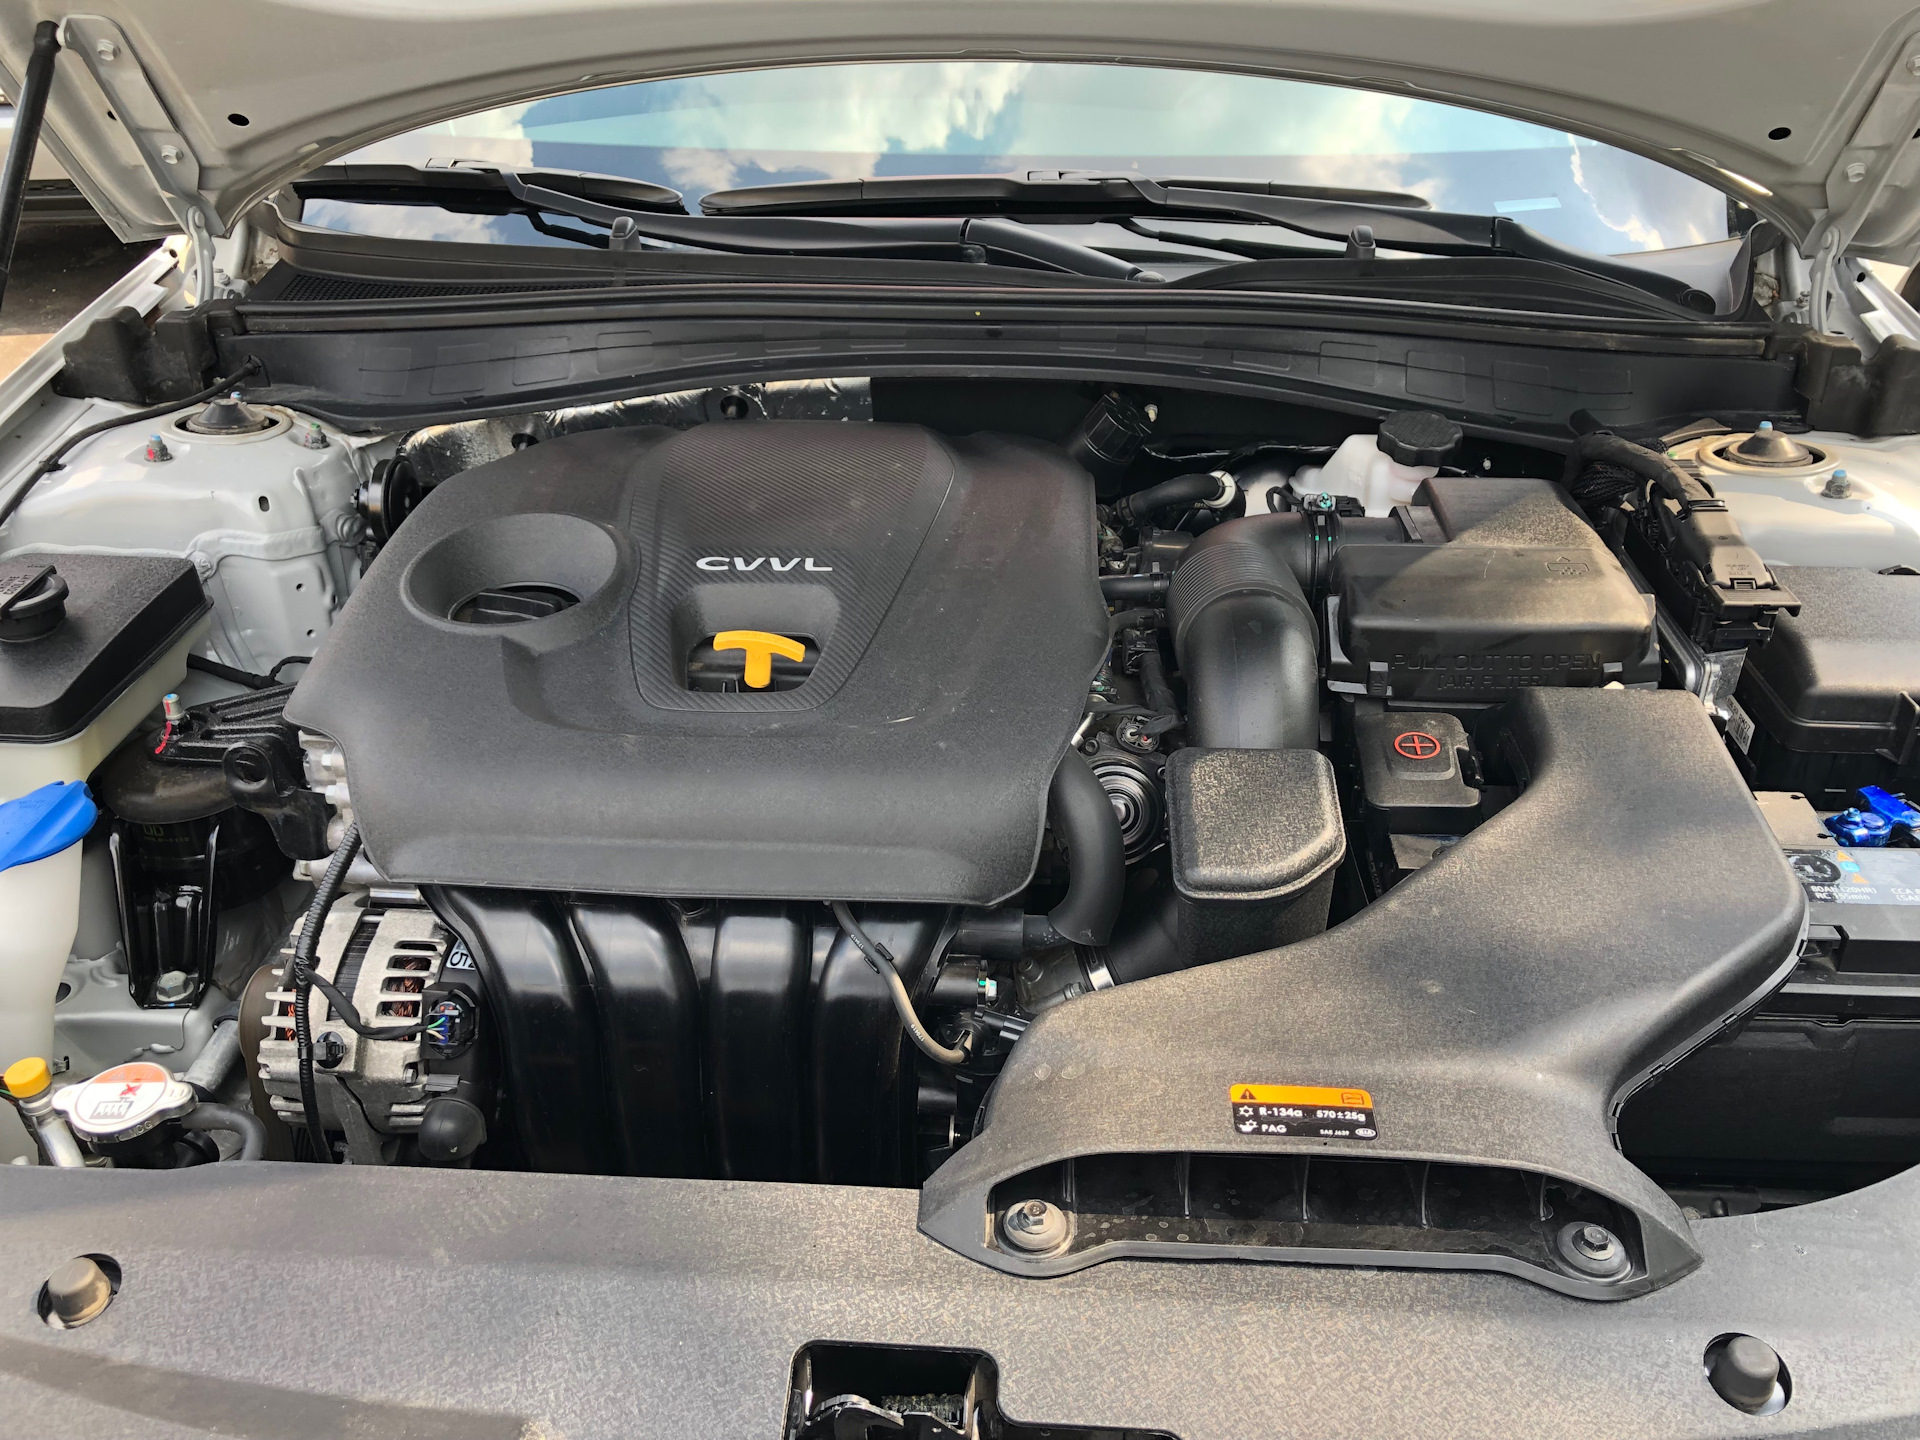 Киа оптима моторное масло. Двигатель Киа Оптима 2.4. Мотор Киа Оптима 2.4 2017-. Киа Оптима 2019 2.0 двигатель. Двигатель Киа Оптима 2.0 CVVL.